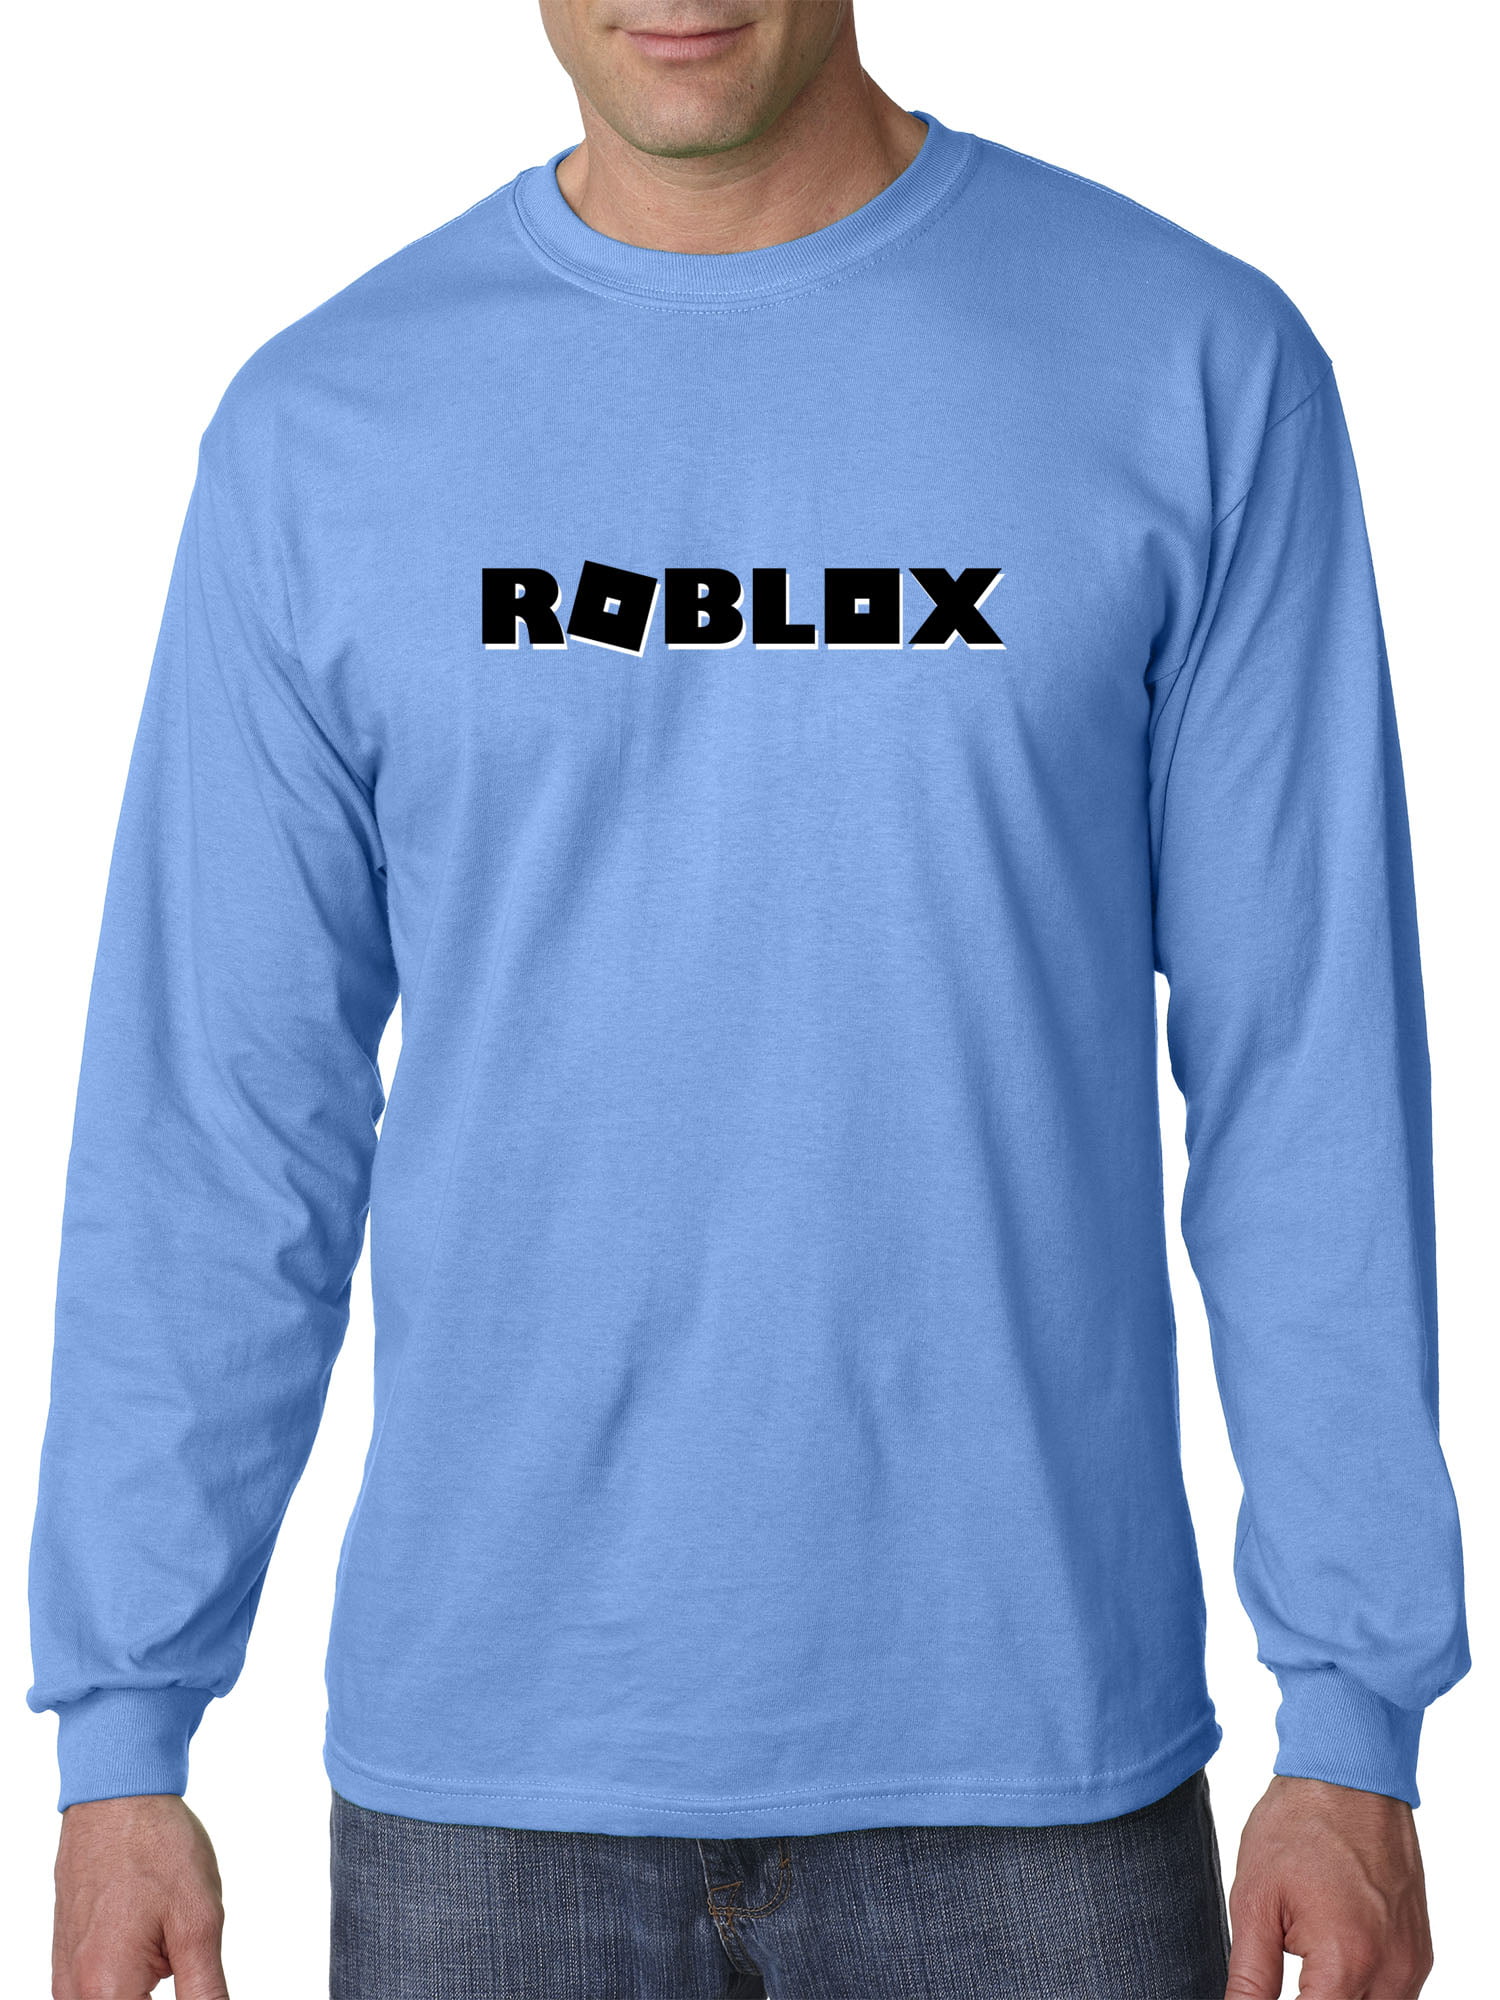 Roblox T Shirt Blue Shop Clothing Shoes Online - roblox tokyo t shirt